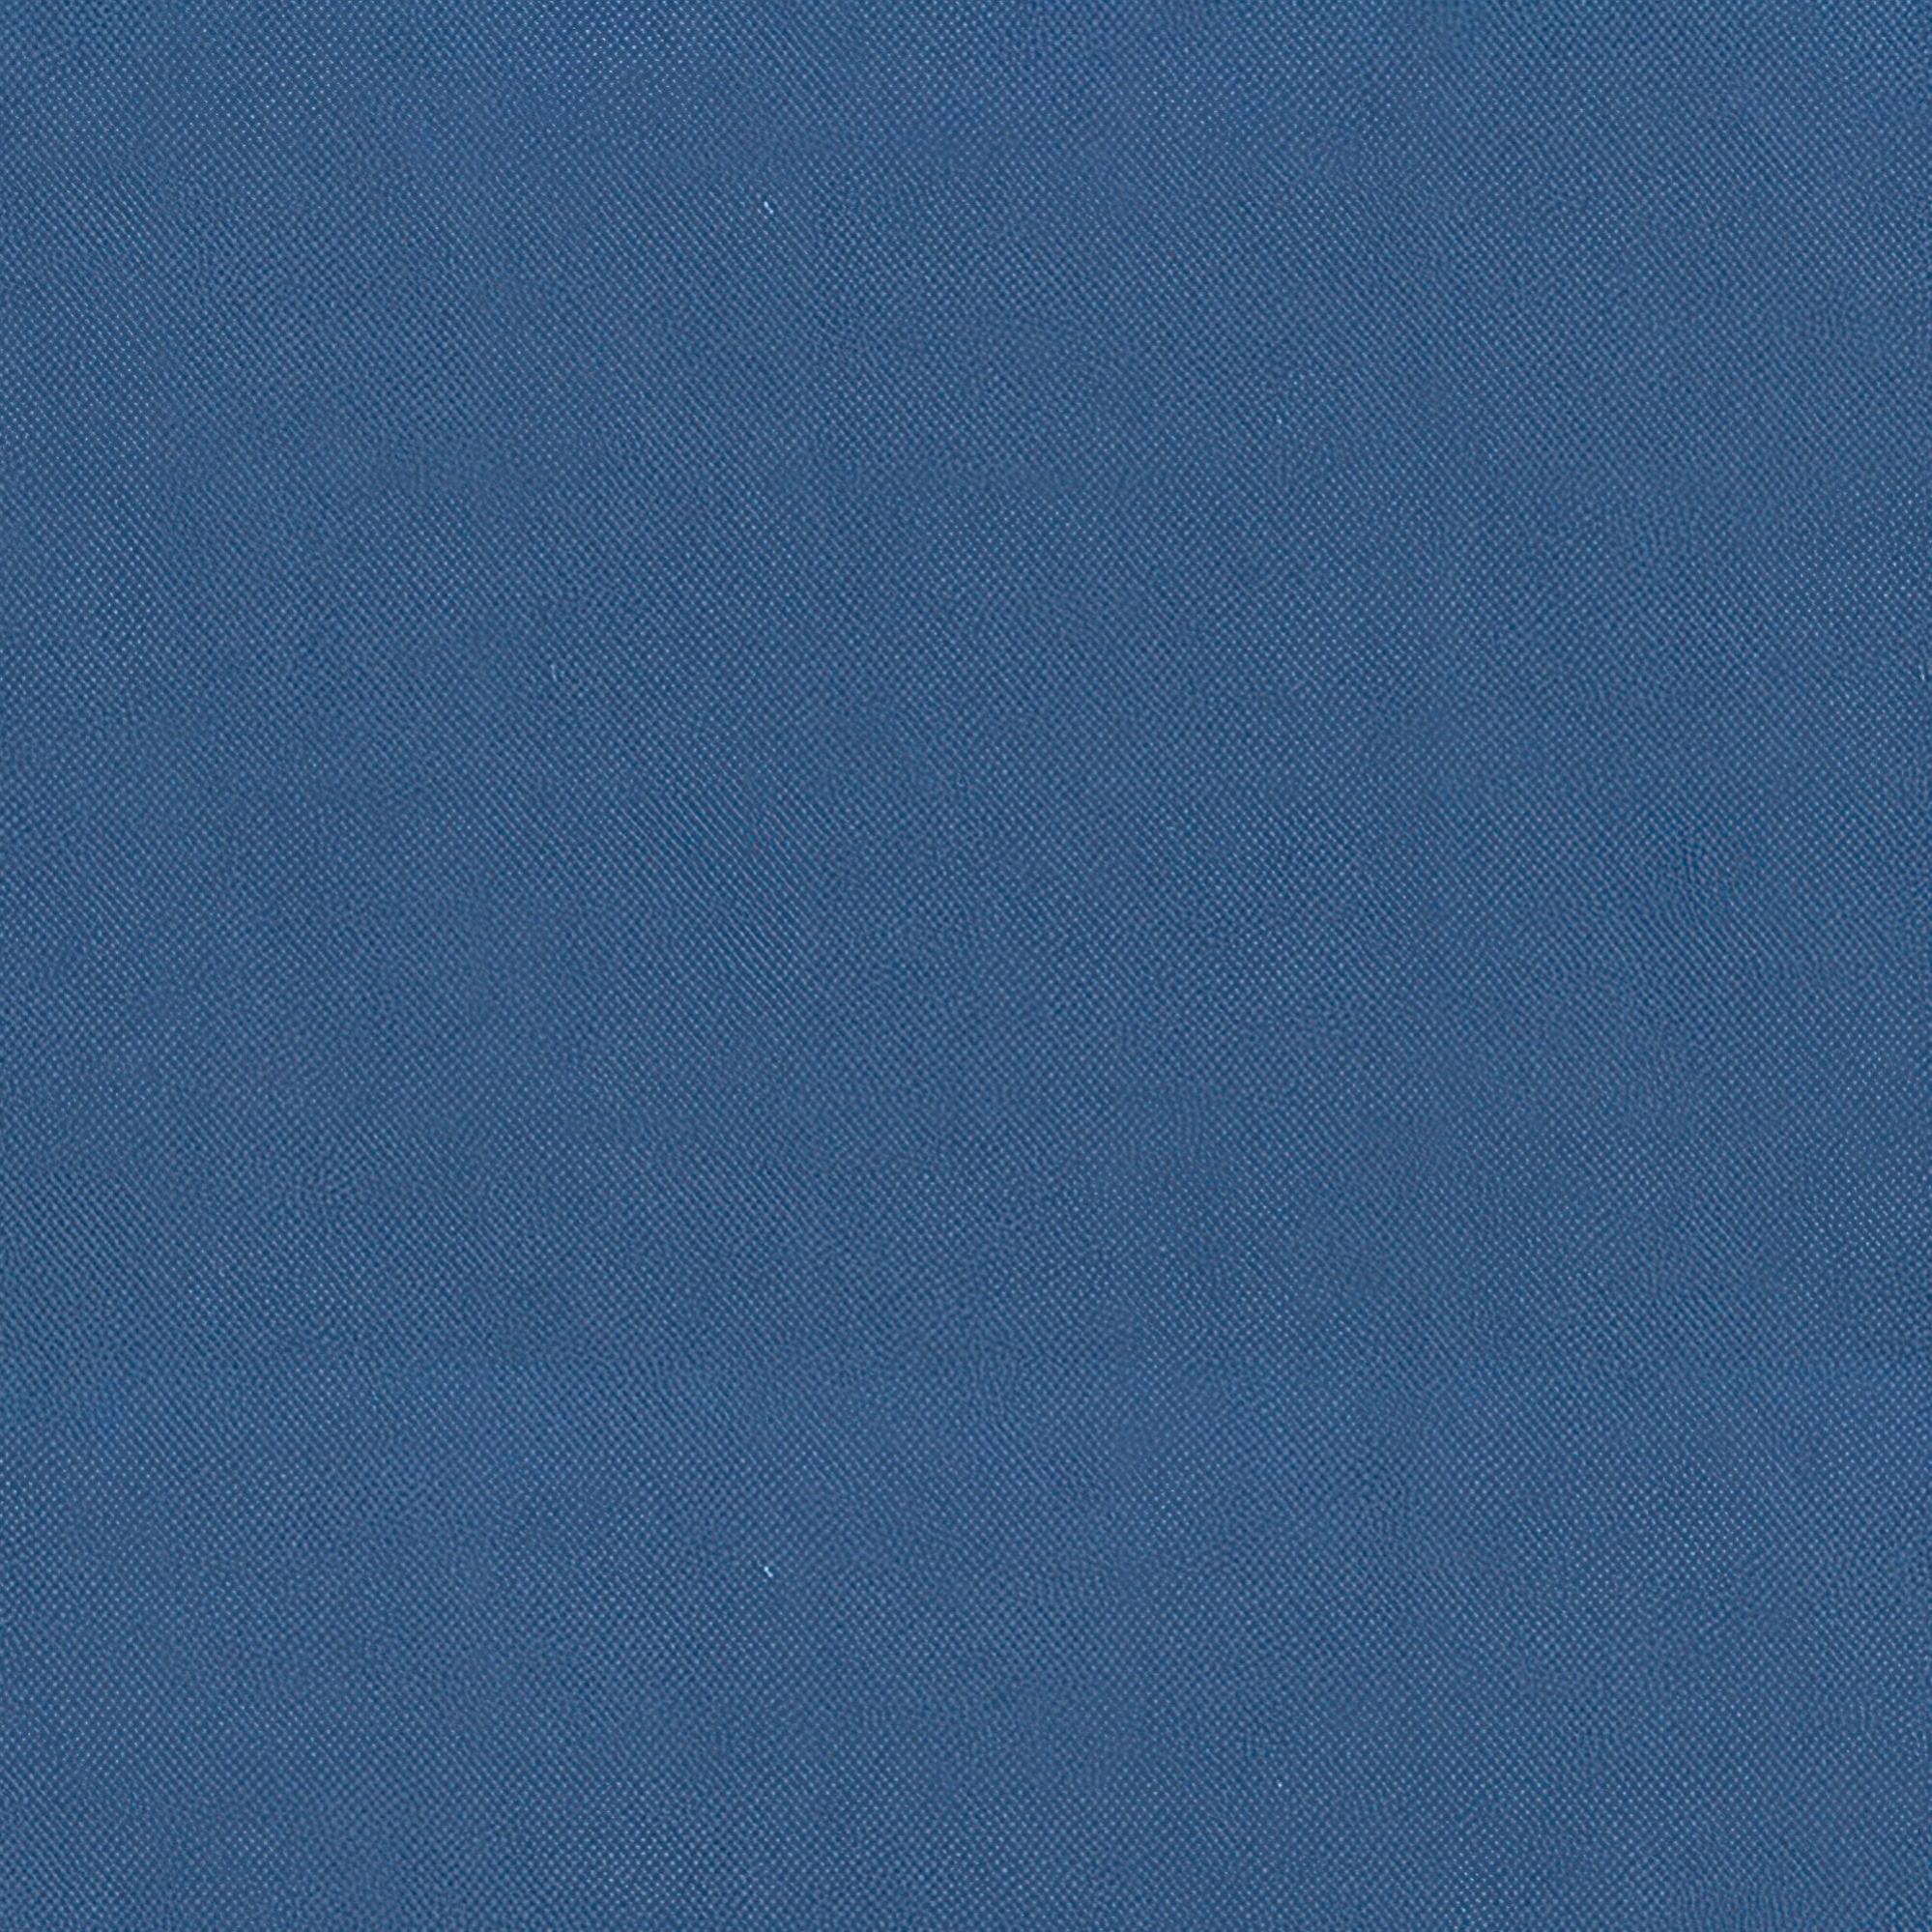 Tela al corte lino rustic azul ancho 300 cm